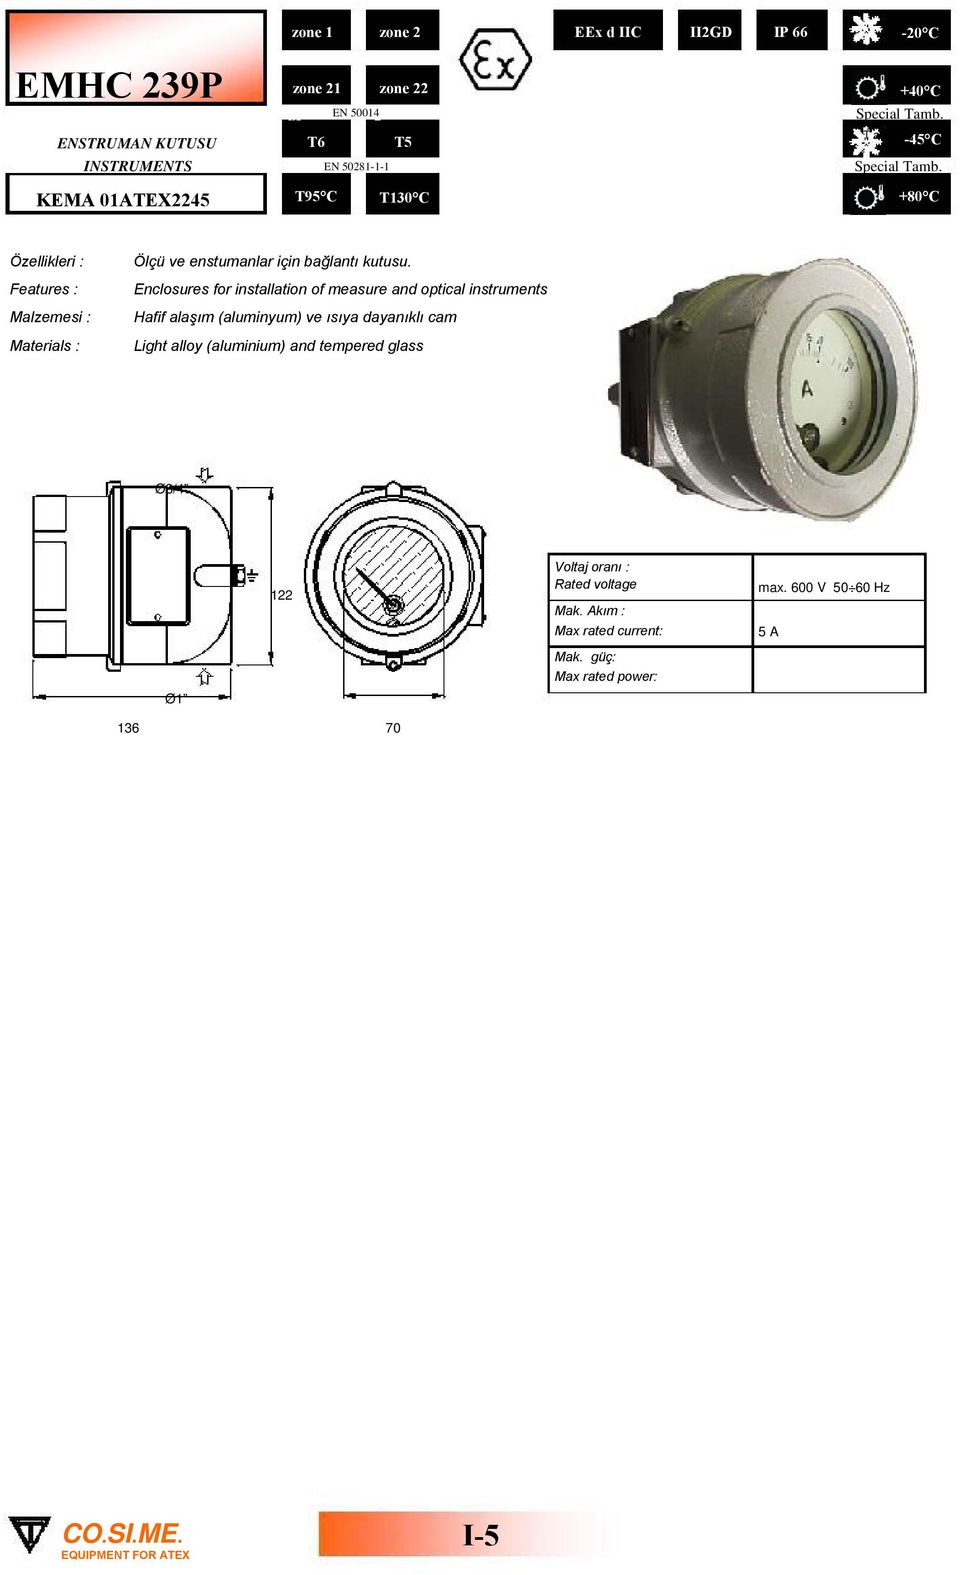 Enclosures for installation of measure and optical instruments Hafif alaşım (aluminyum) ve ısıya dayanıklı cam Light alloy